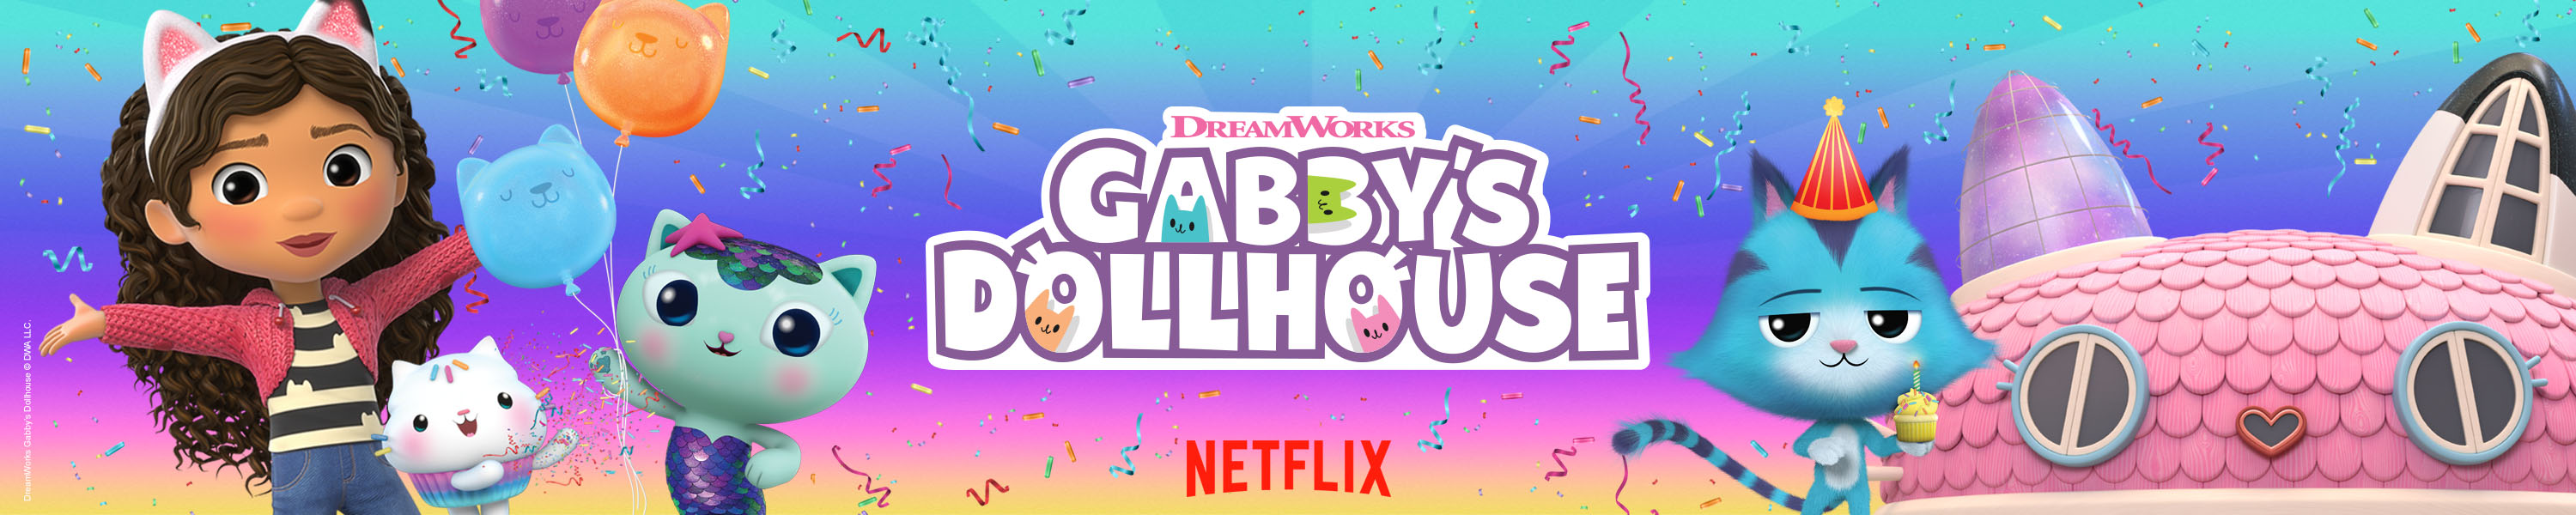 Gabby's Dollhouse Toys - Unicorn & Punkboi UK